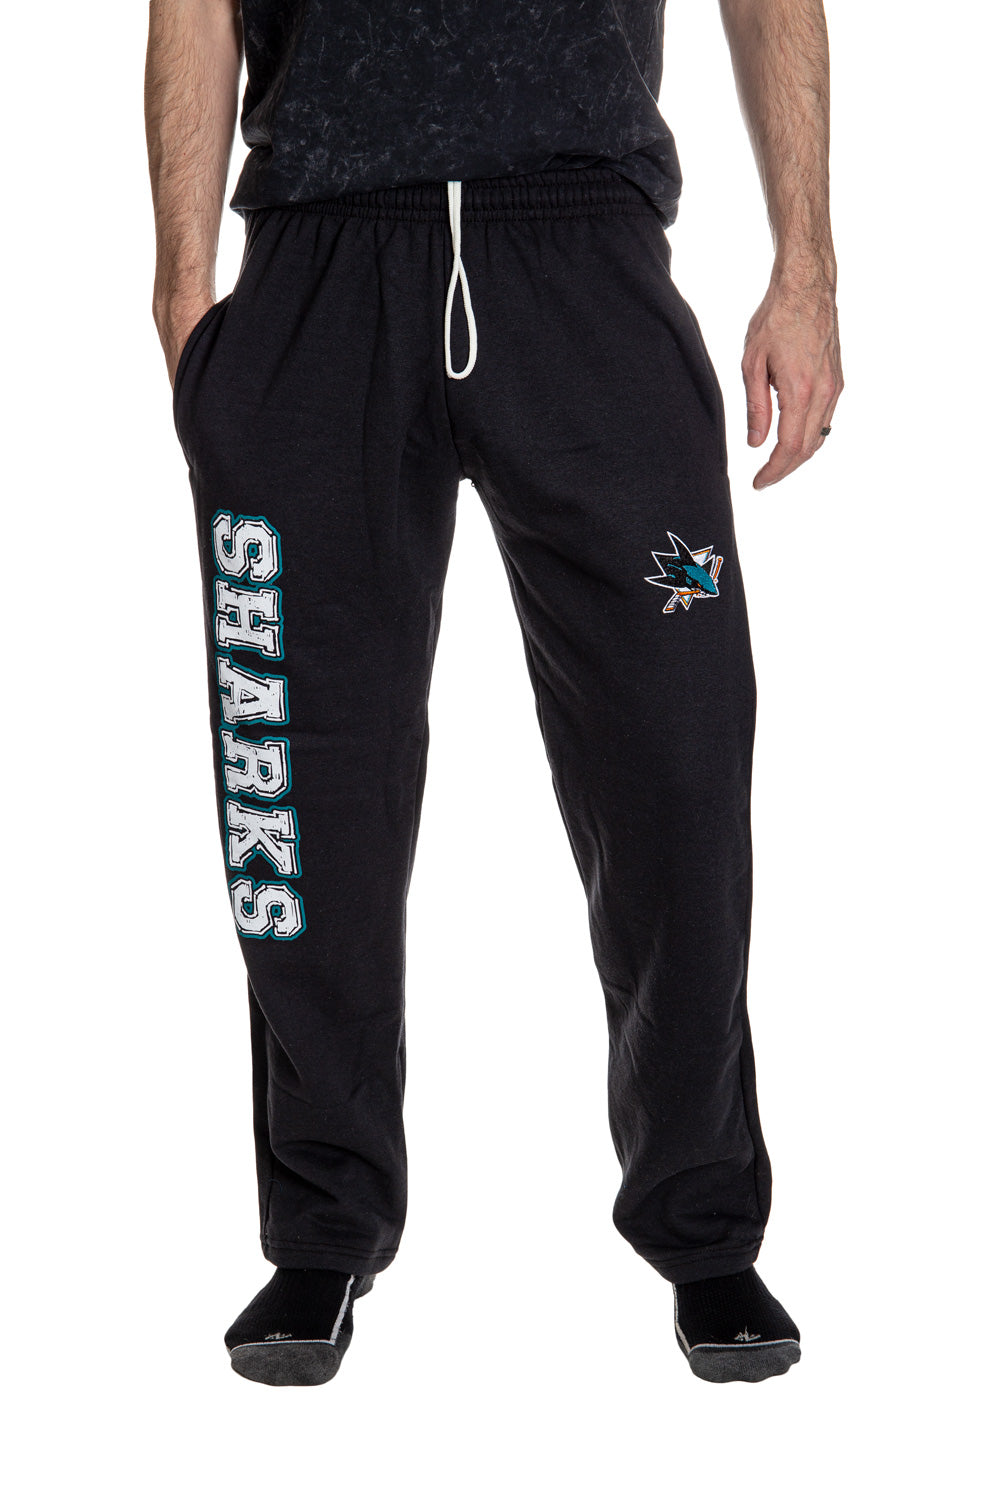 San Jose Sharks Premium Fleece Sweatpants Front View.